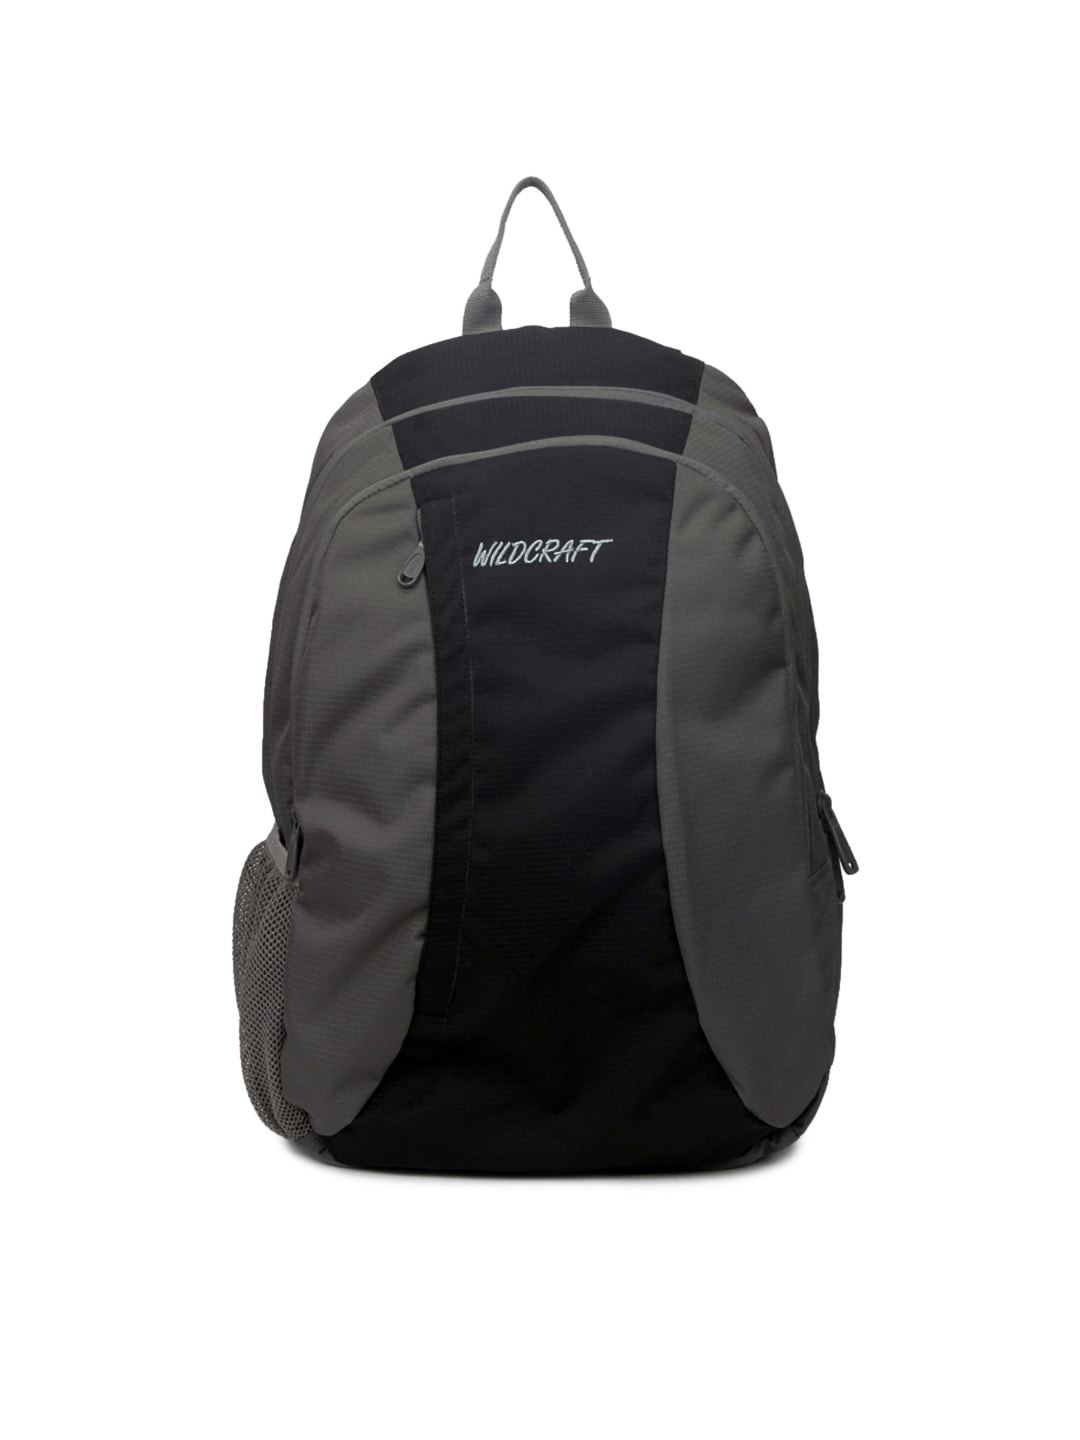 Wildcraft Unisex Black & Grey Backpack